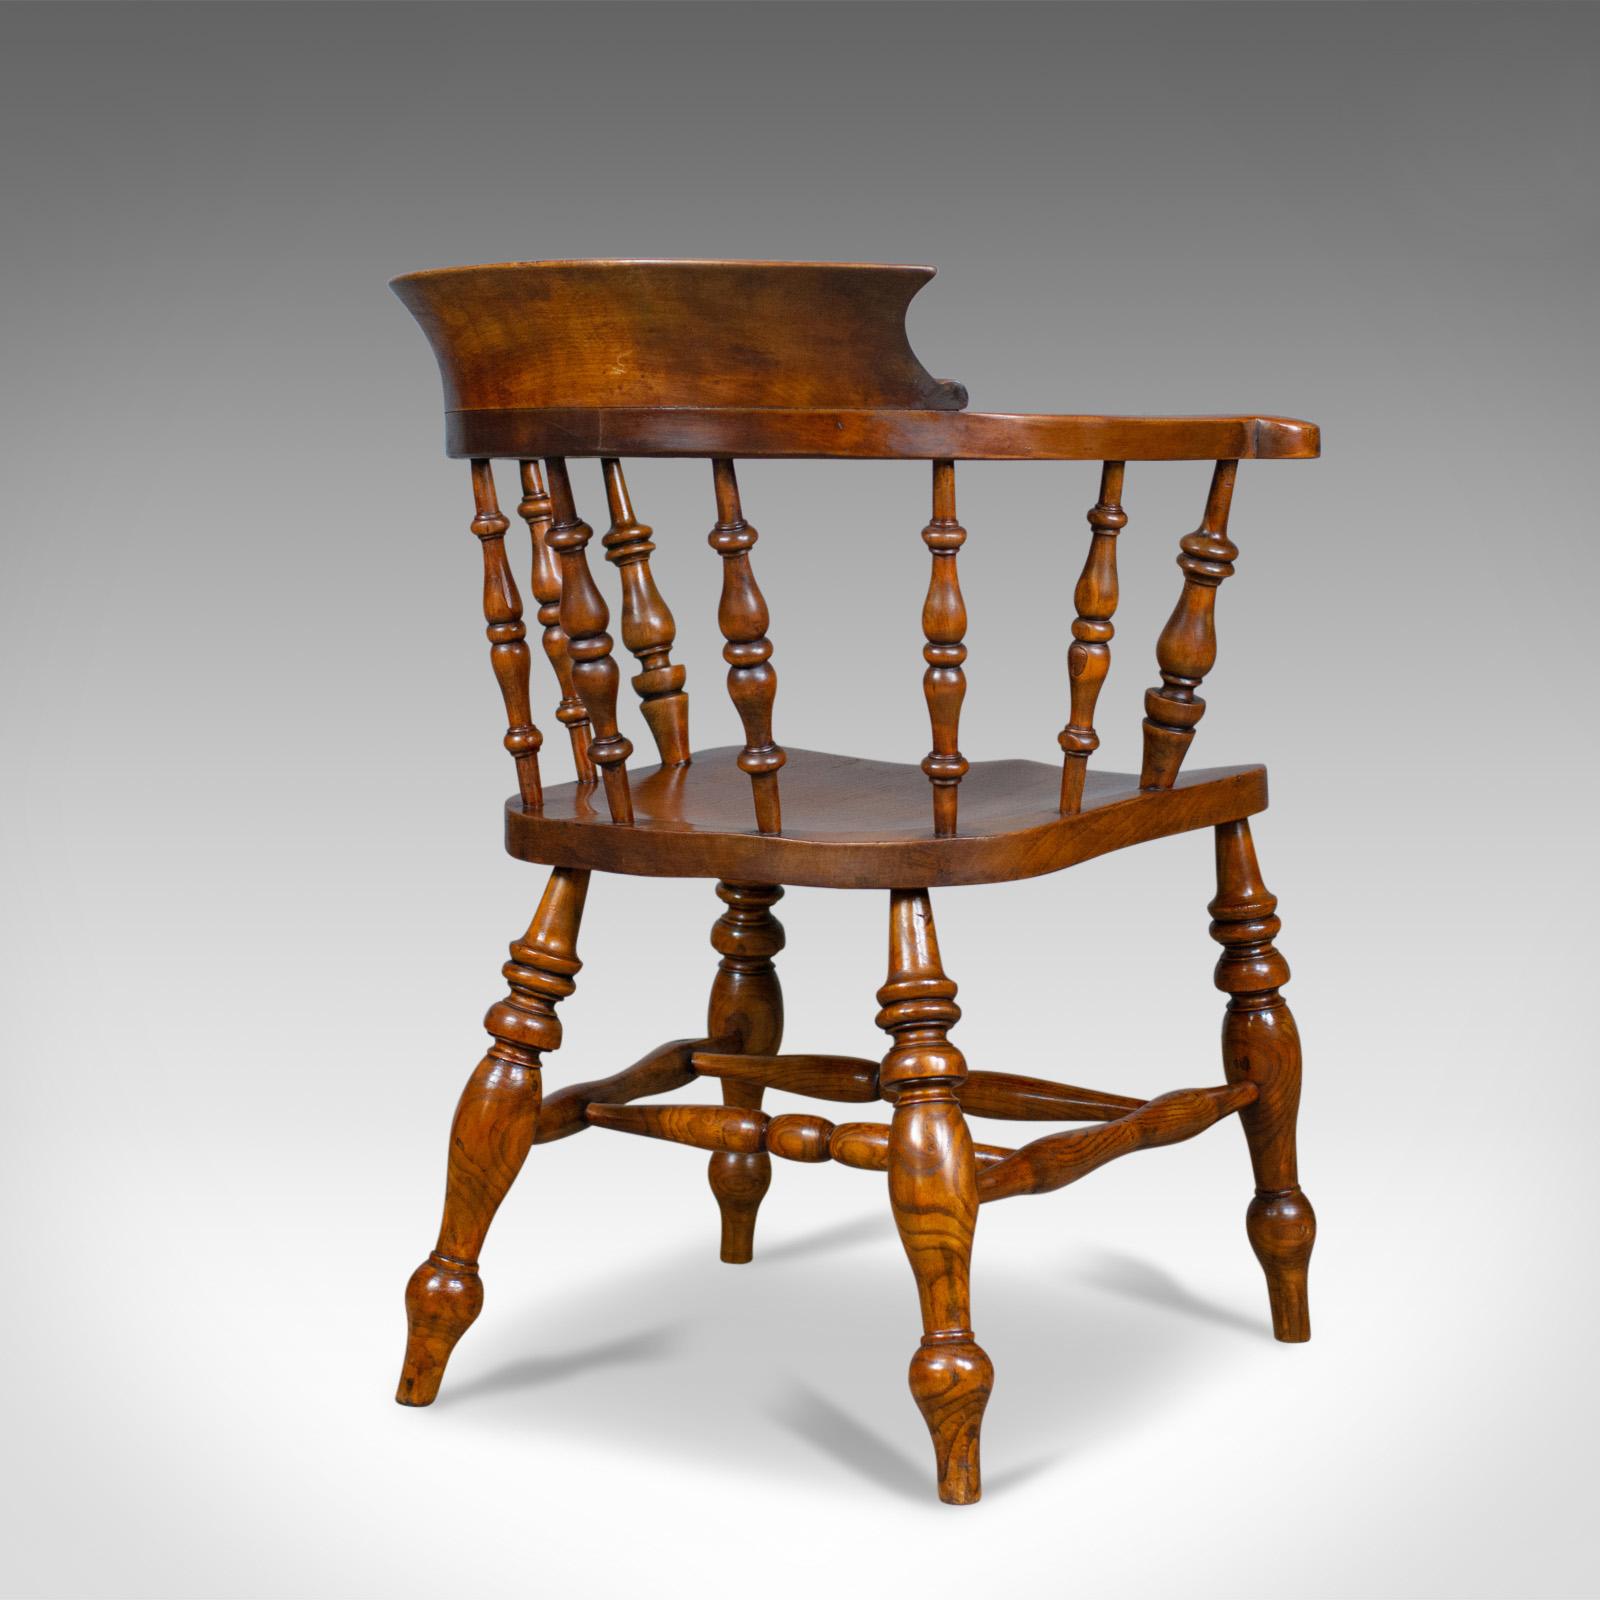 English Antique Elbow Chair, Victorian, Elm, Bow-Back, Smokers, Captains Desk circa 1880